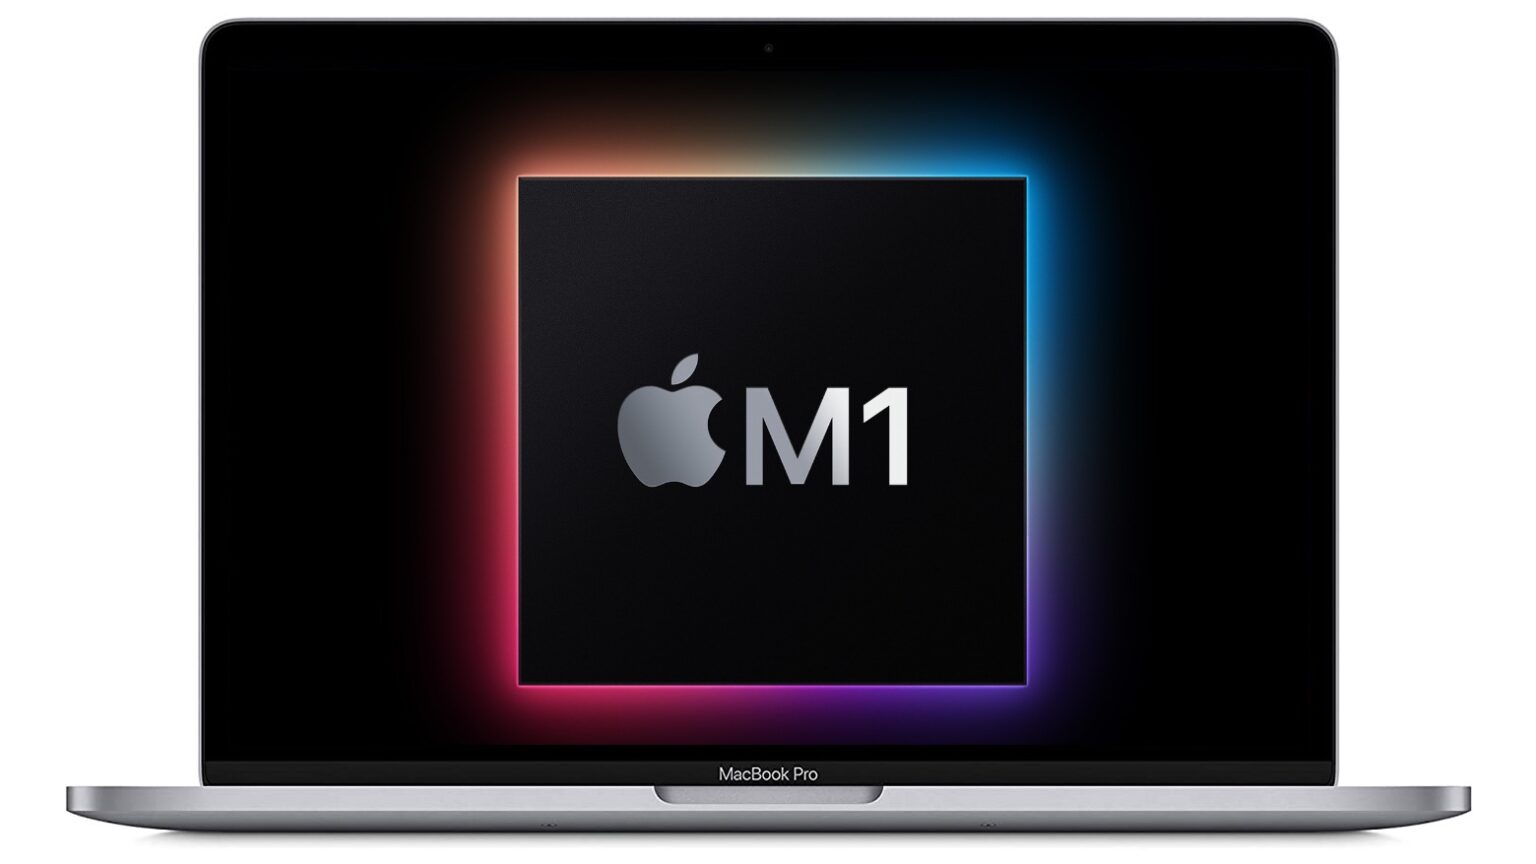 An M1 Mac like the new MacBook Pro has some drawbacks.